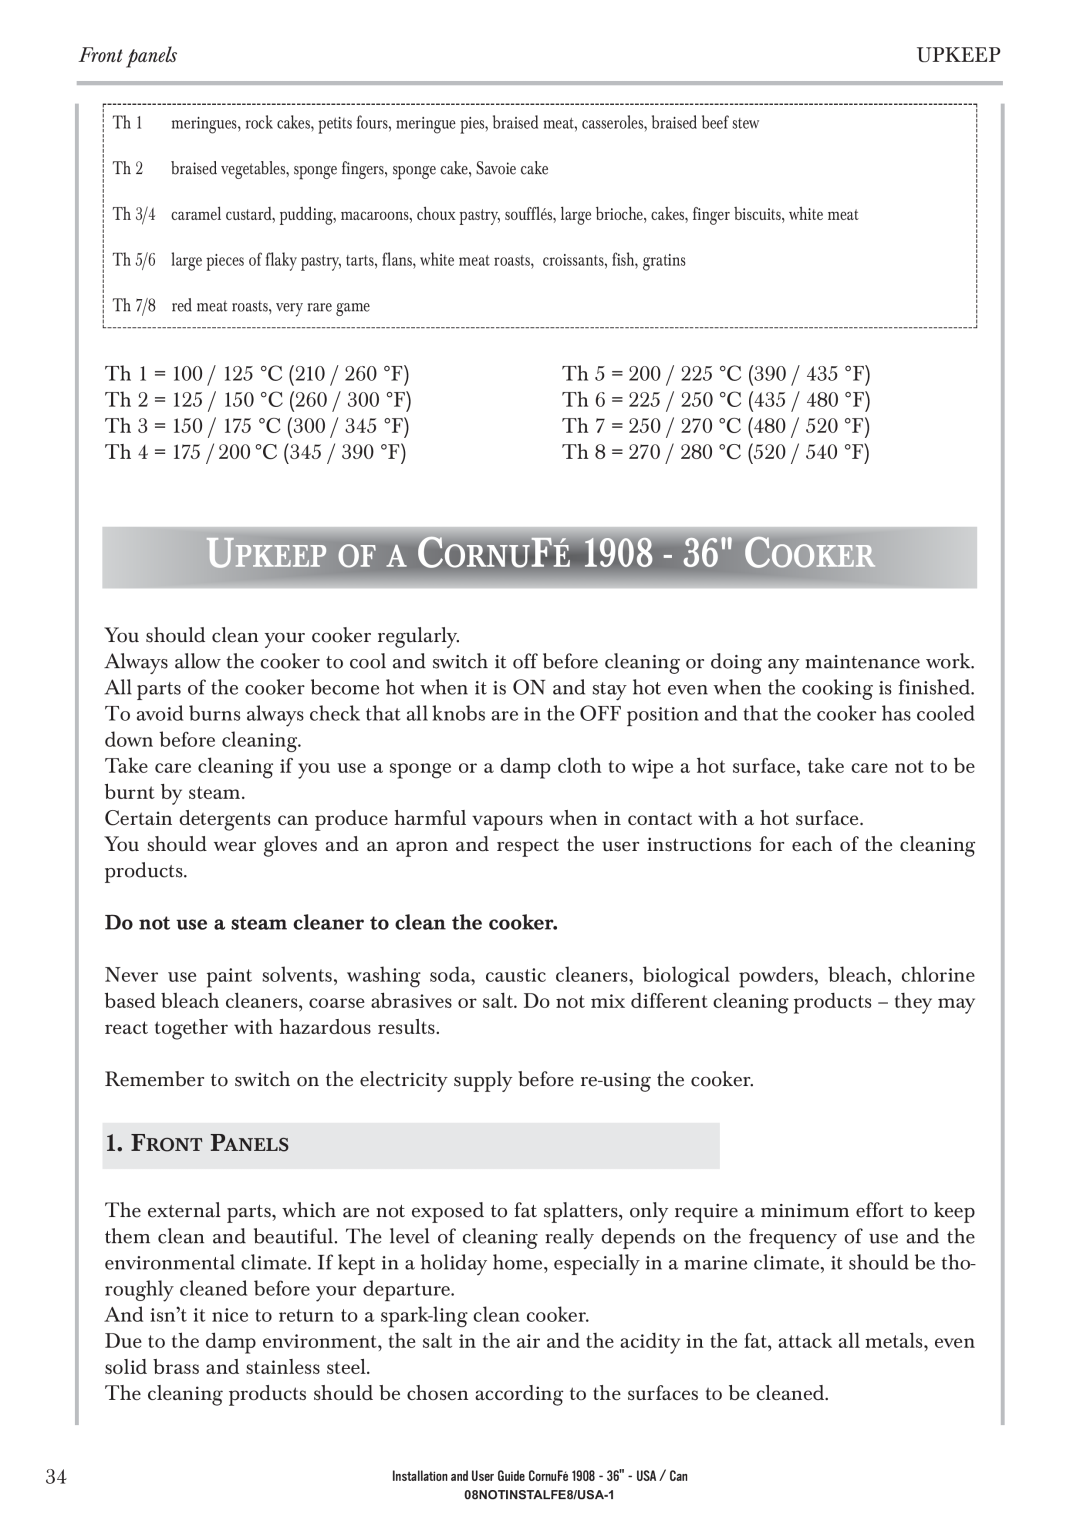 GE manual UPKEEP OF A CORNUFÉ 1908 - 36 COOKER, Front panels, Upkeep 